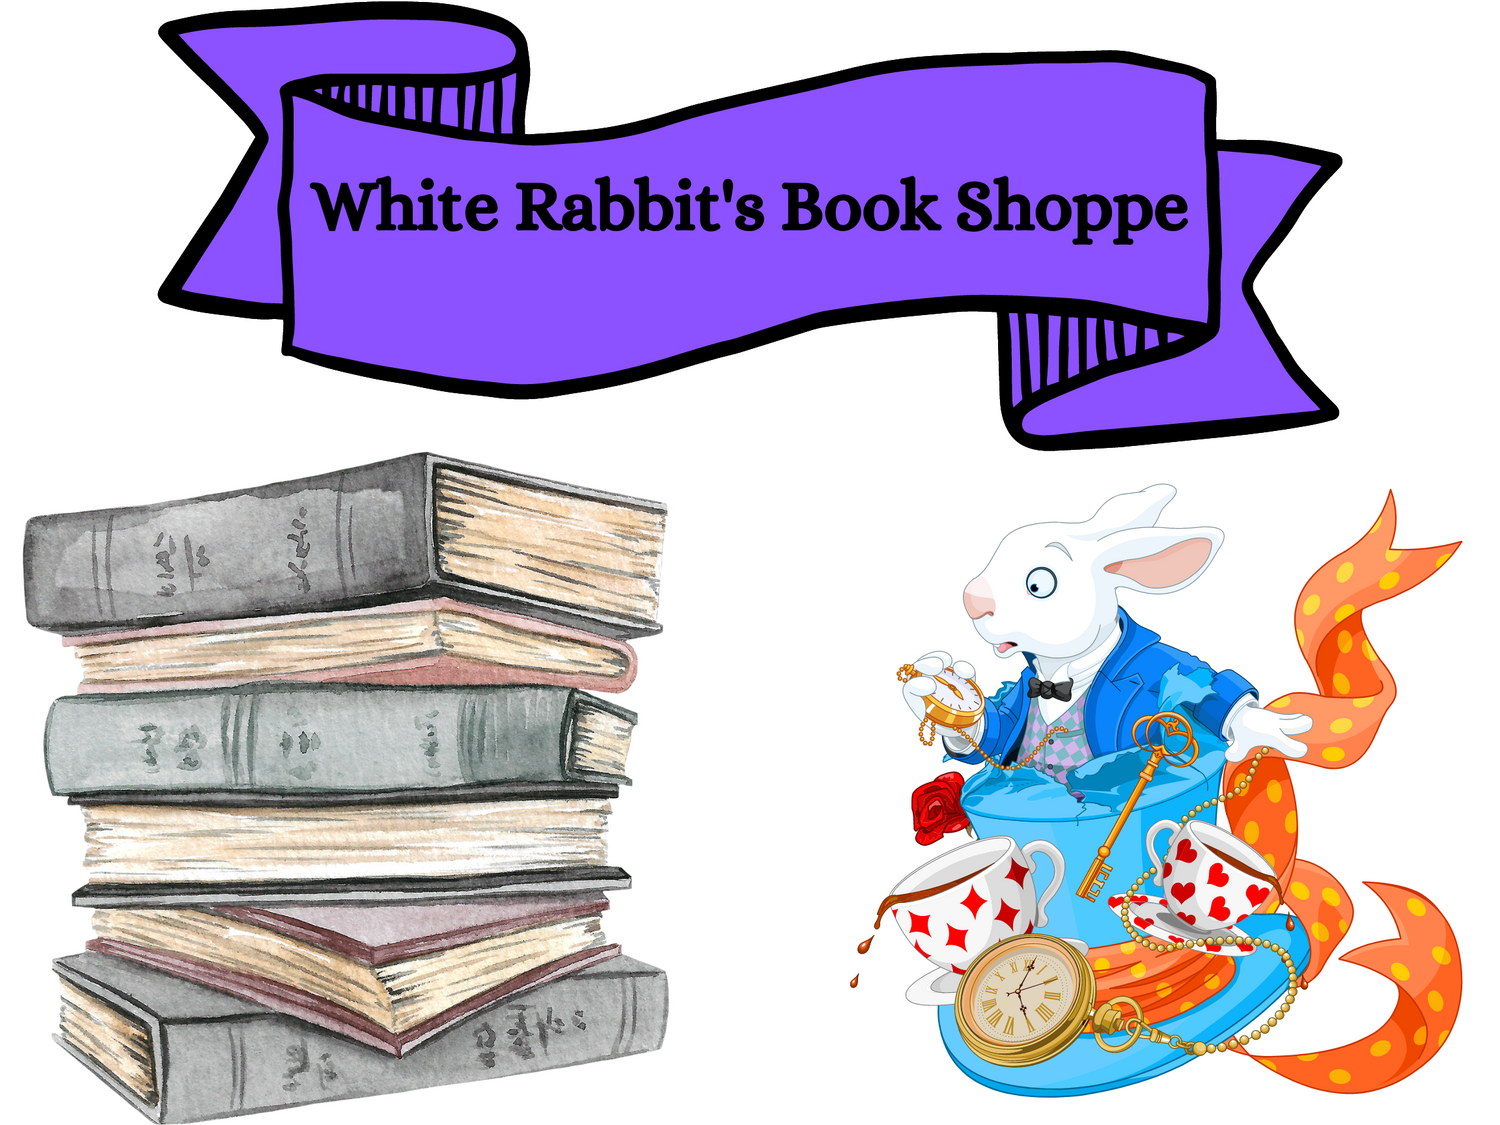 White Rabbit's Book Shoppe